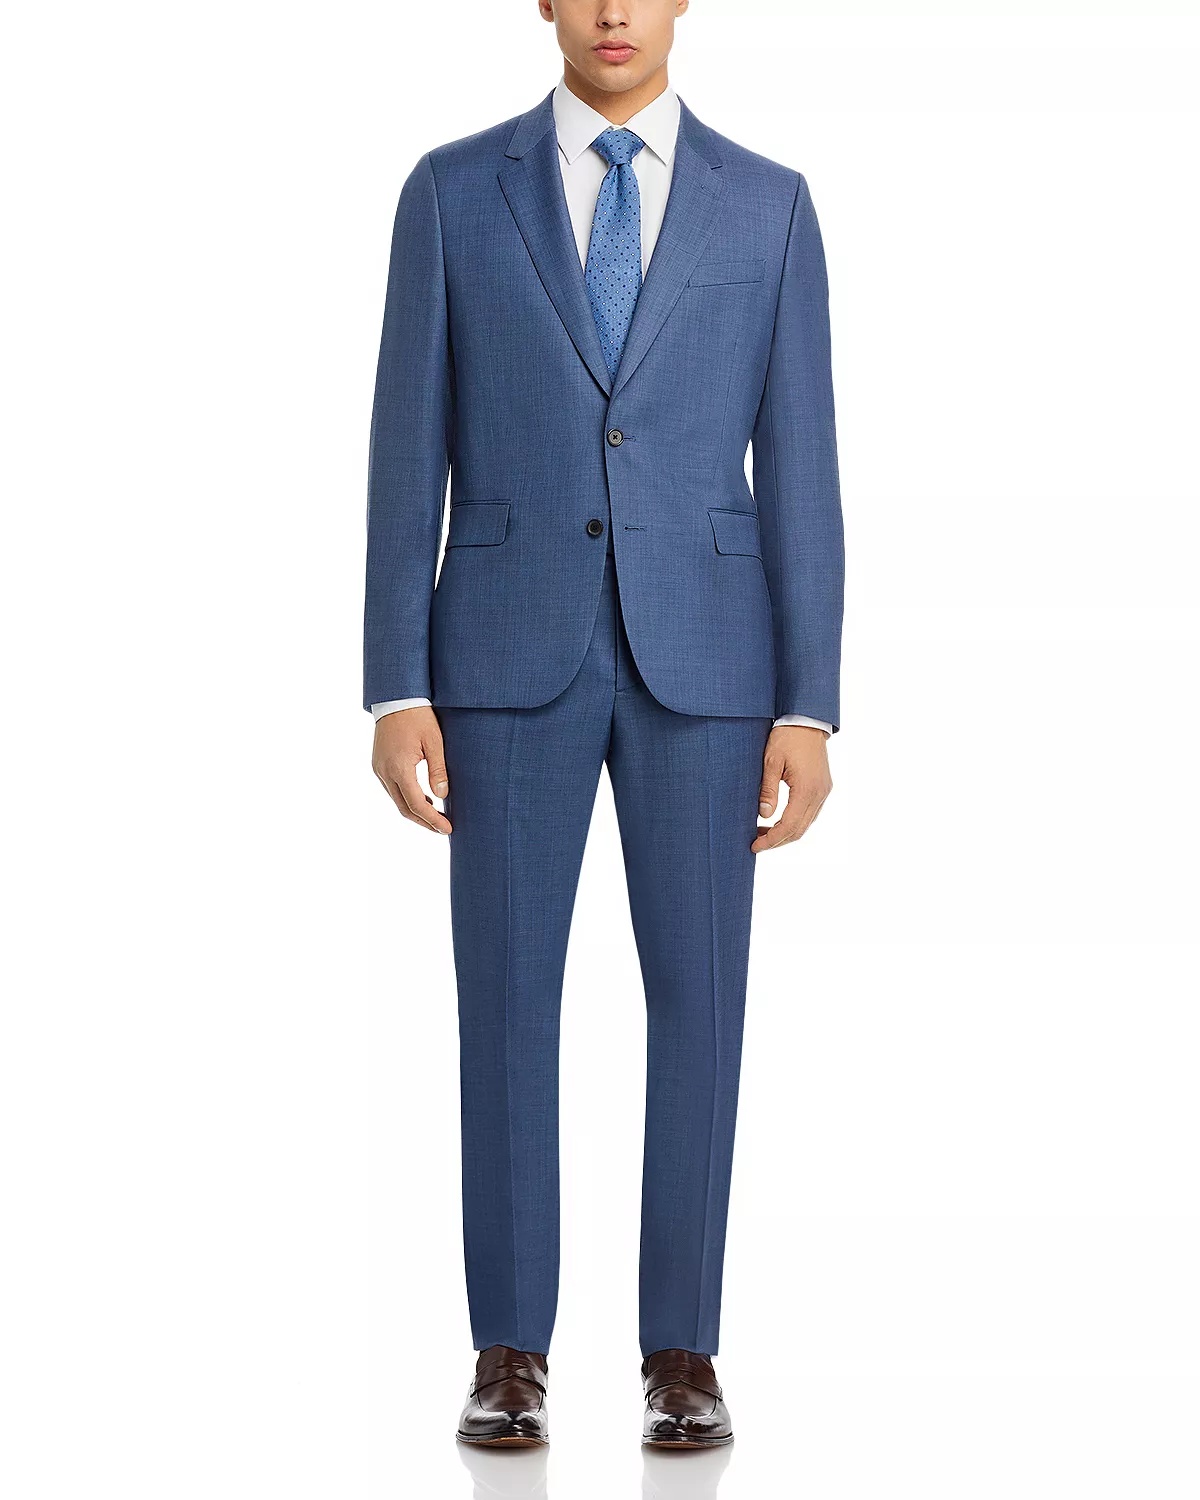 Soho Sharkskin Extra Slim Fit Suit - 2